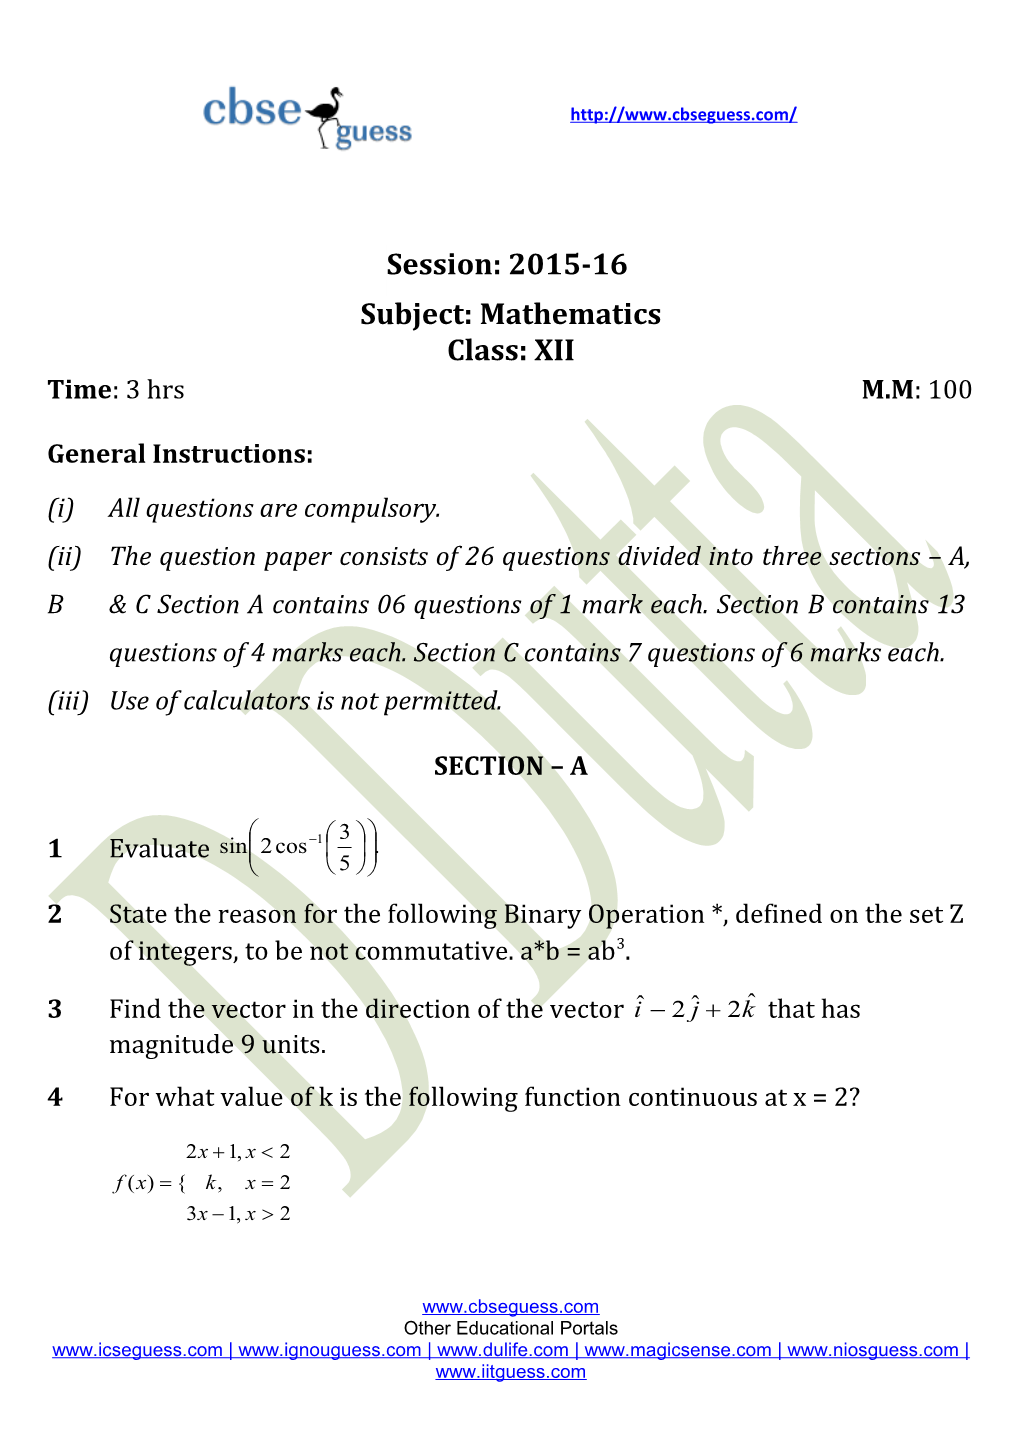 Subject: Mathematics